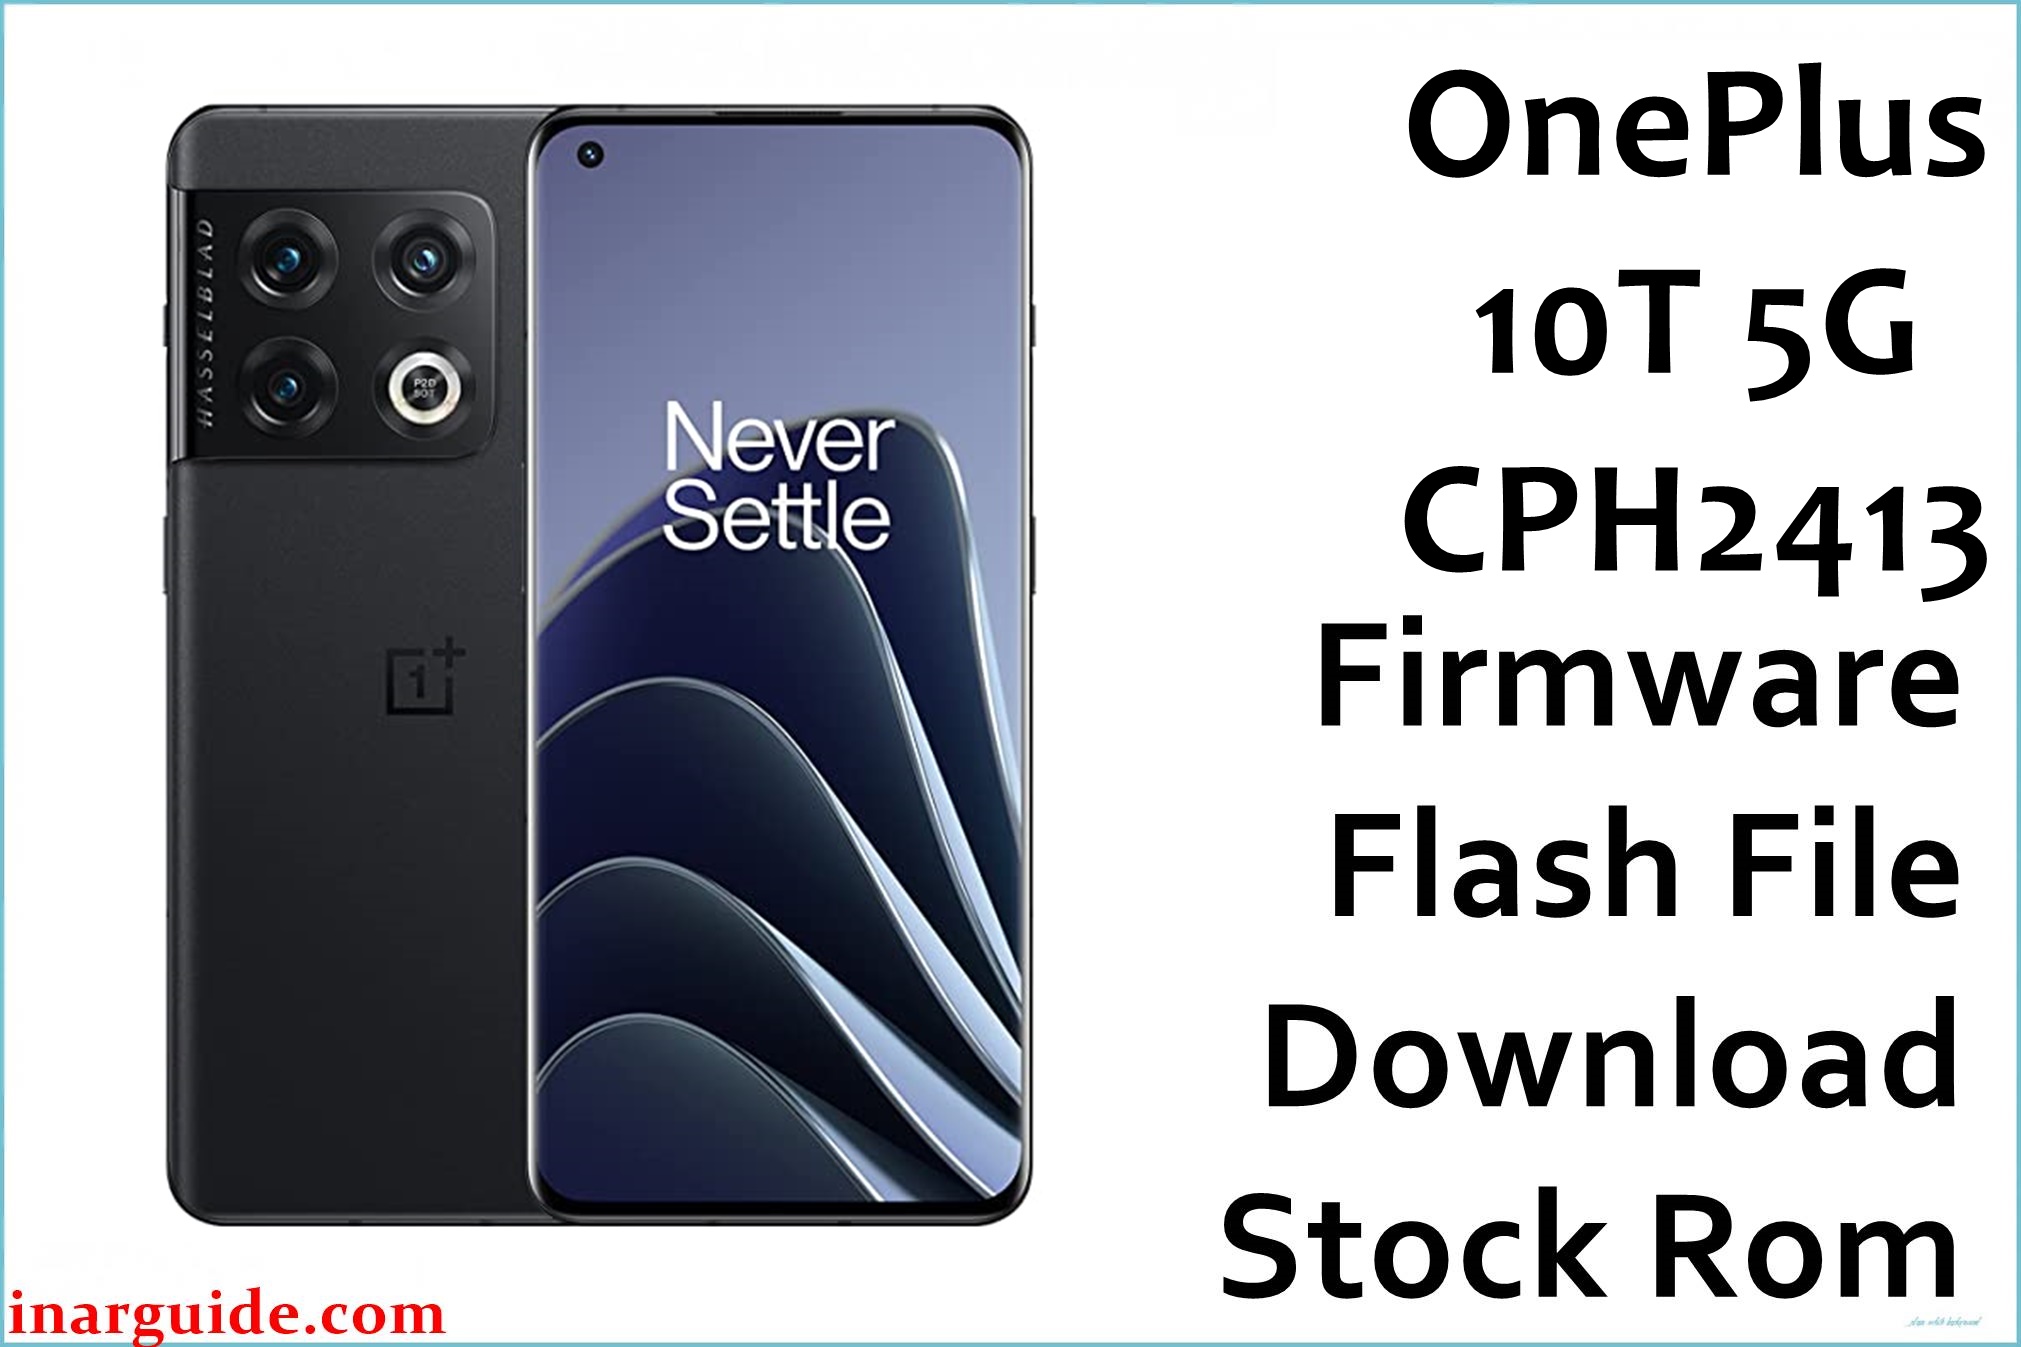 OnePlus 10T 5G CPH2413